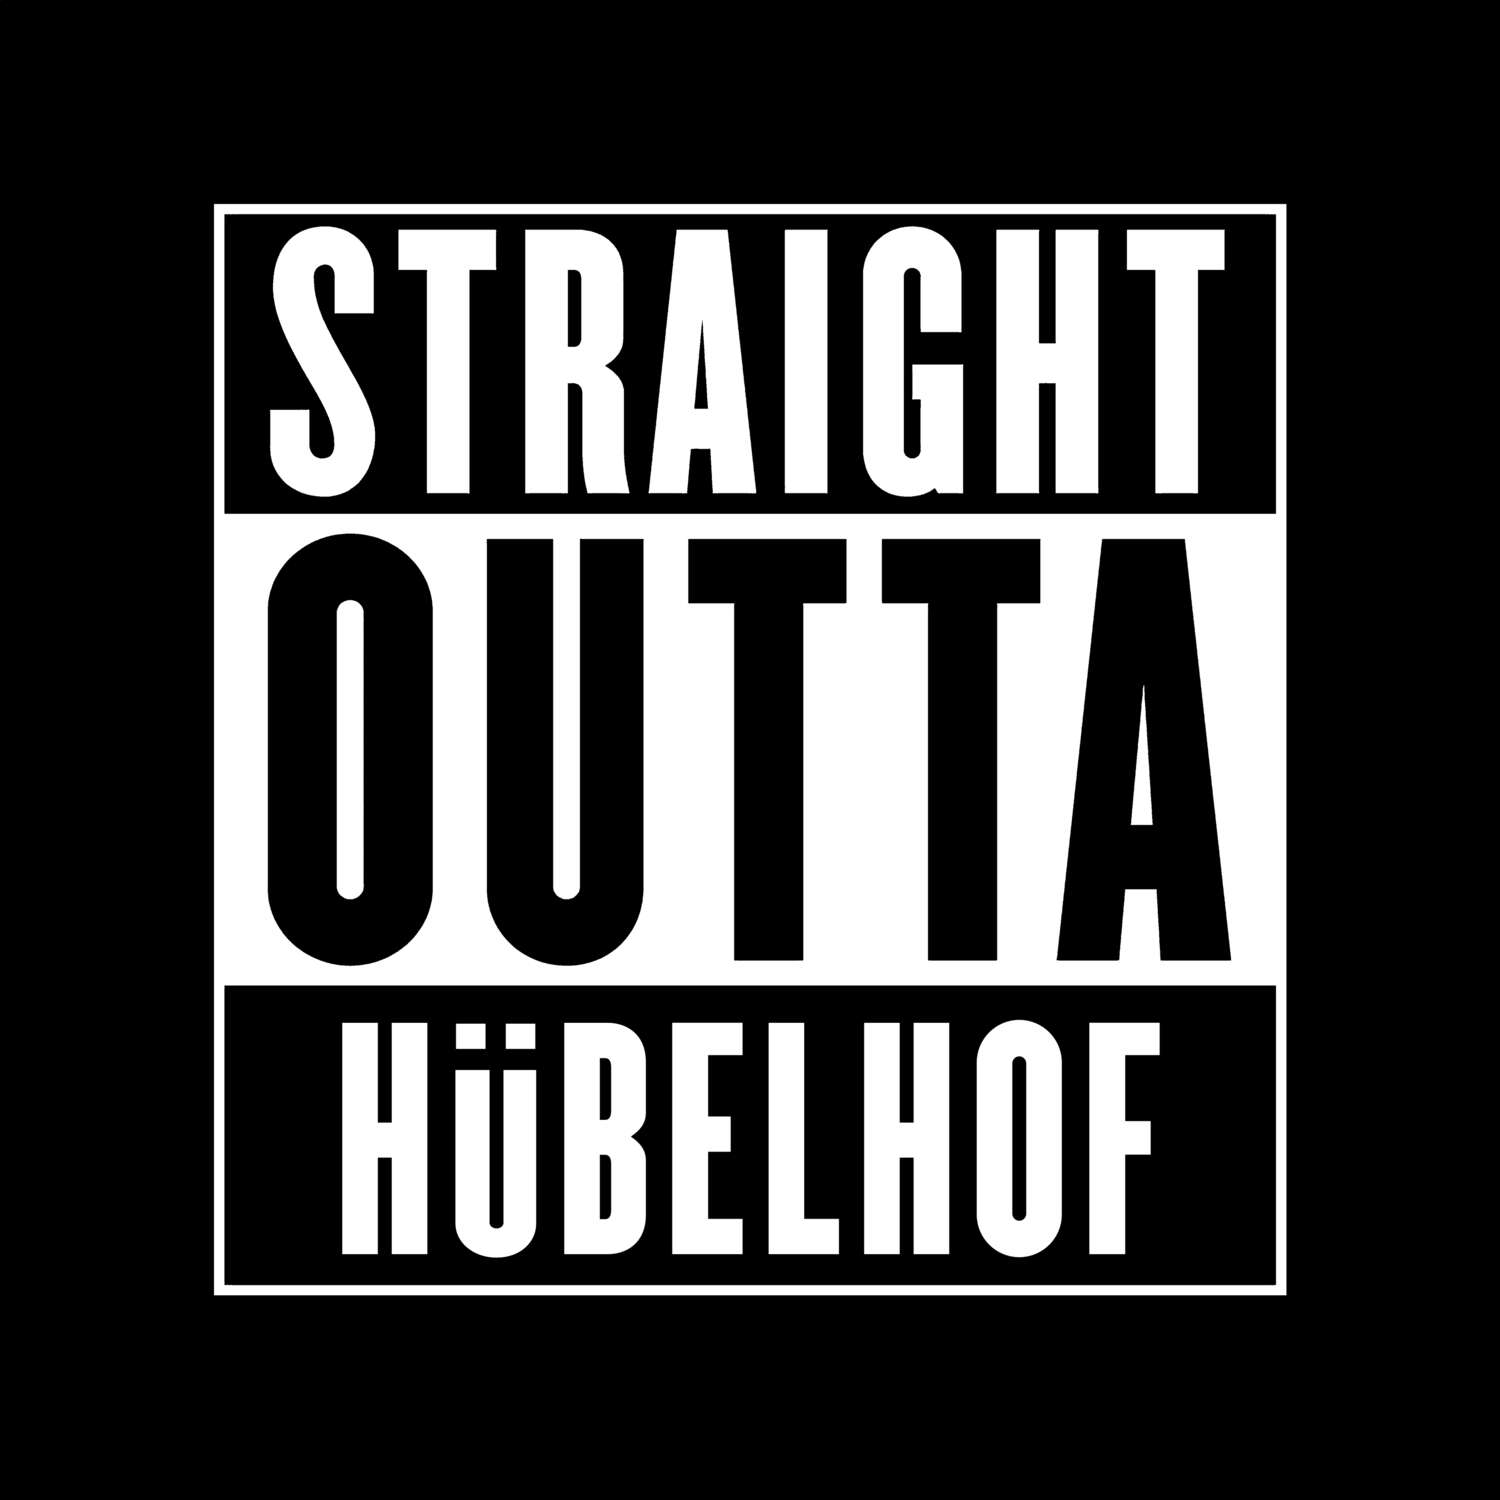 Hübelhof T-Shirt »Straight Outta«